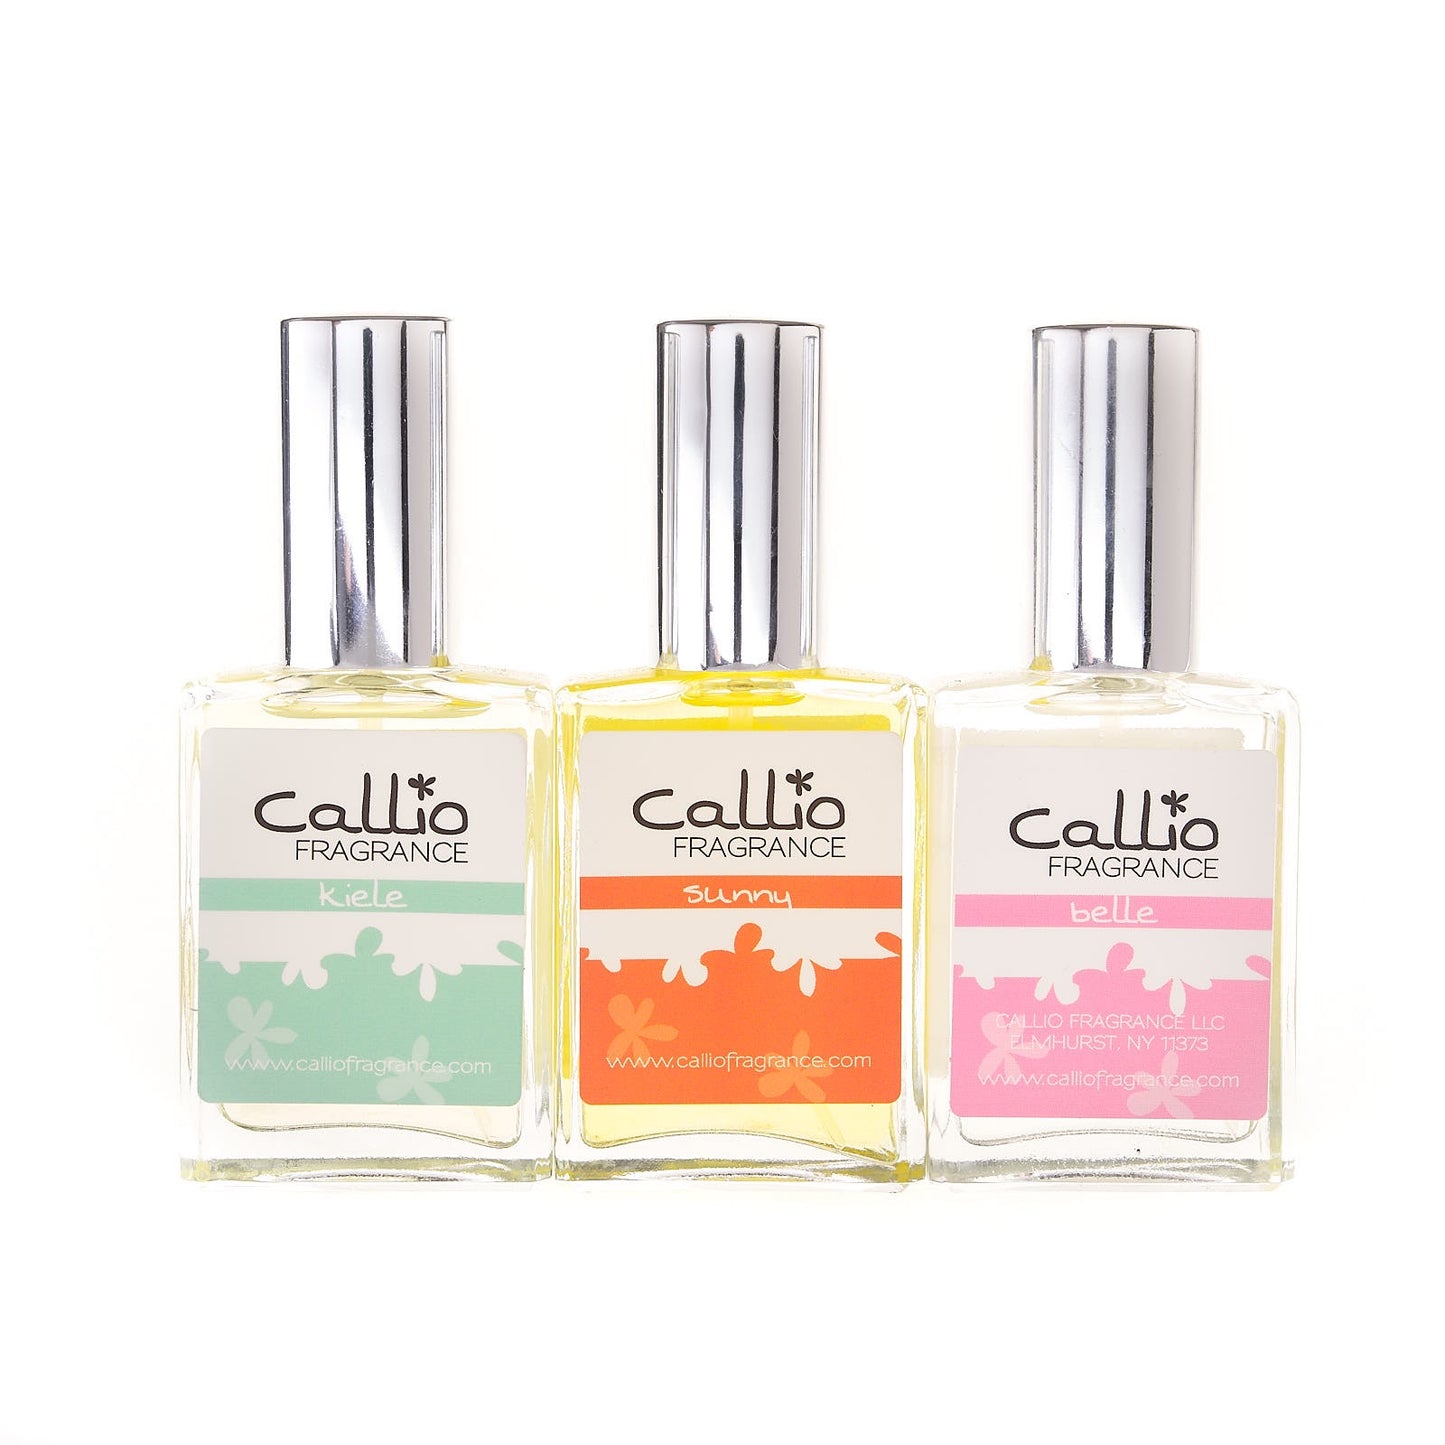 Callio Fragrance Perfume Gift Set featuring Kiele, Sunny, and Belle.